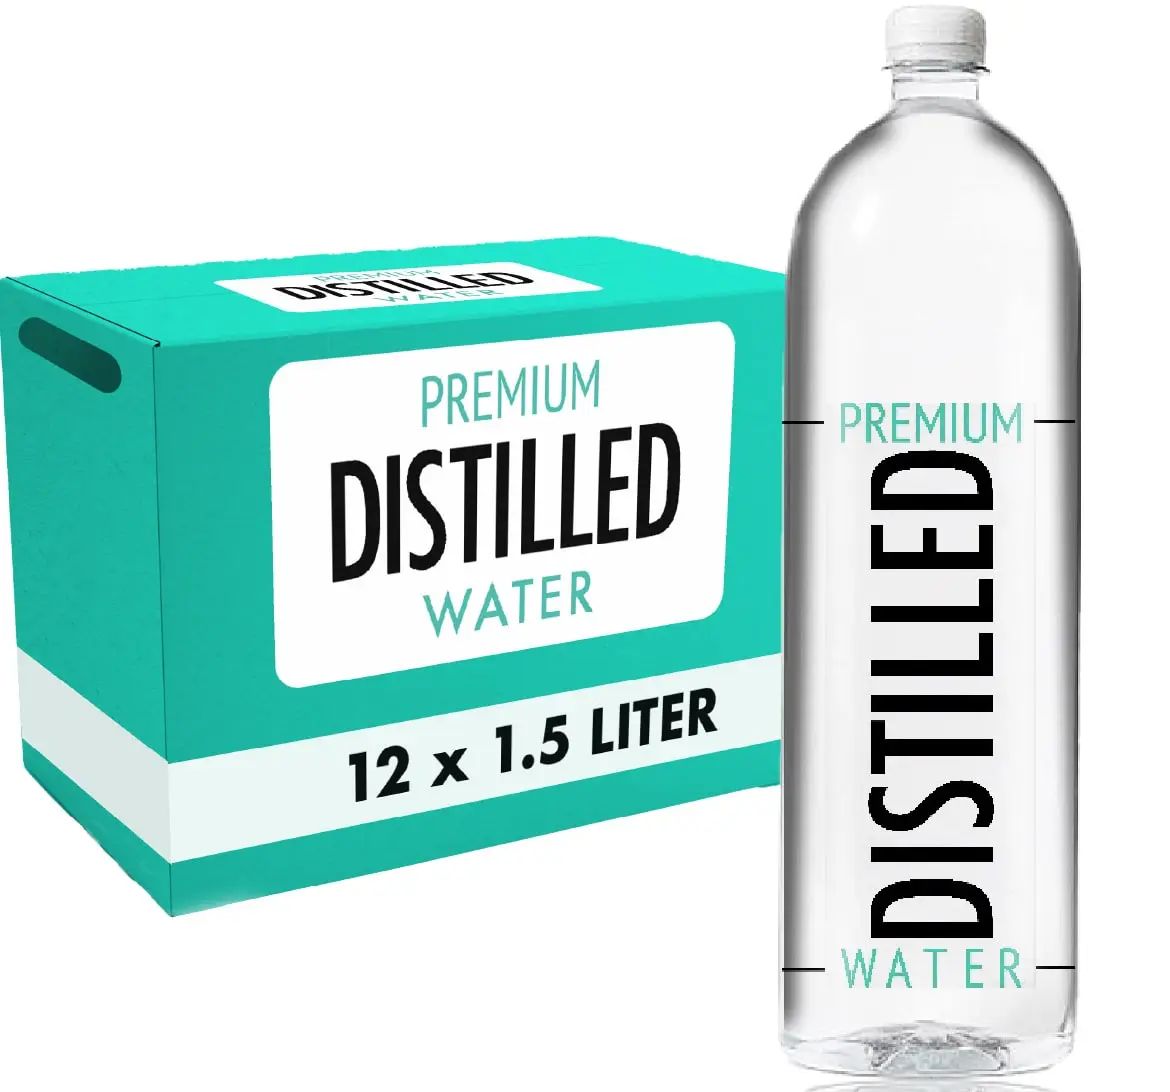 Premiumdistilledwaterartboard1100min